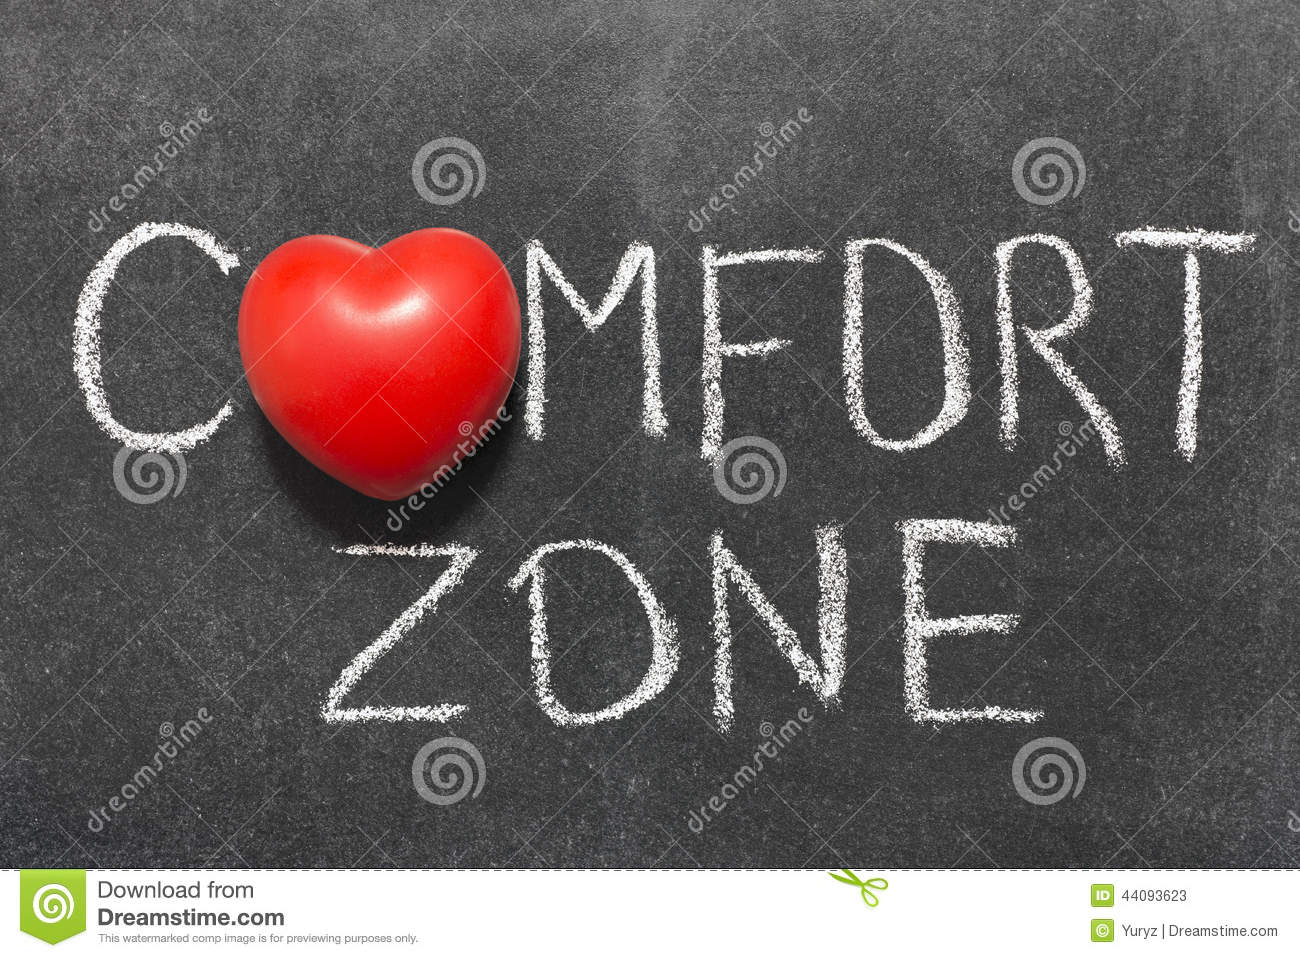 Comfort Zone Phrase Handwritten On Blackboard With Heart Symbol